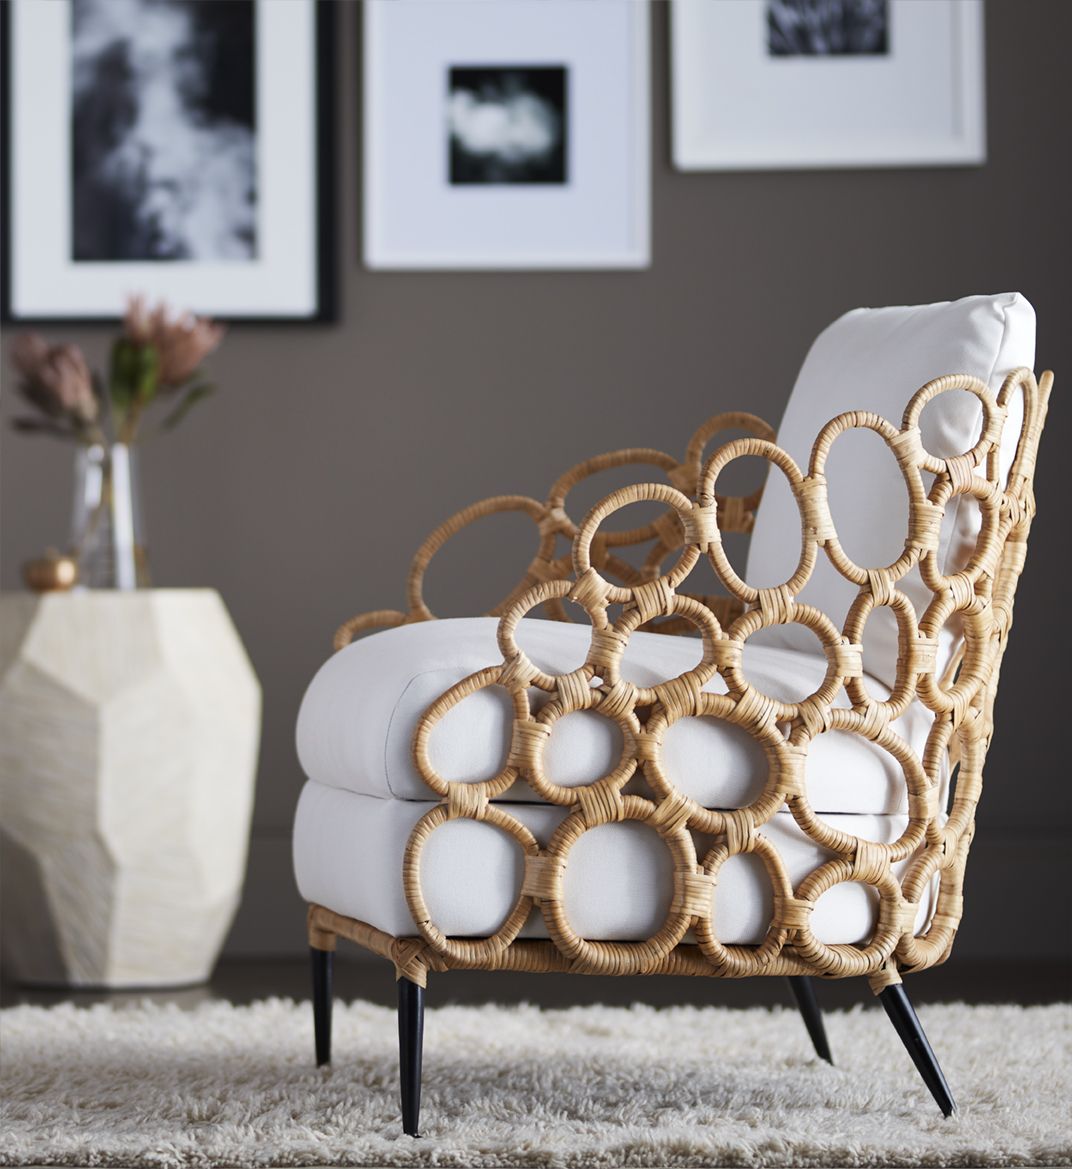 Inspiring Rattan Furniture Designs